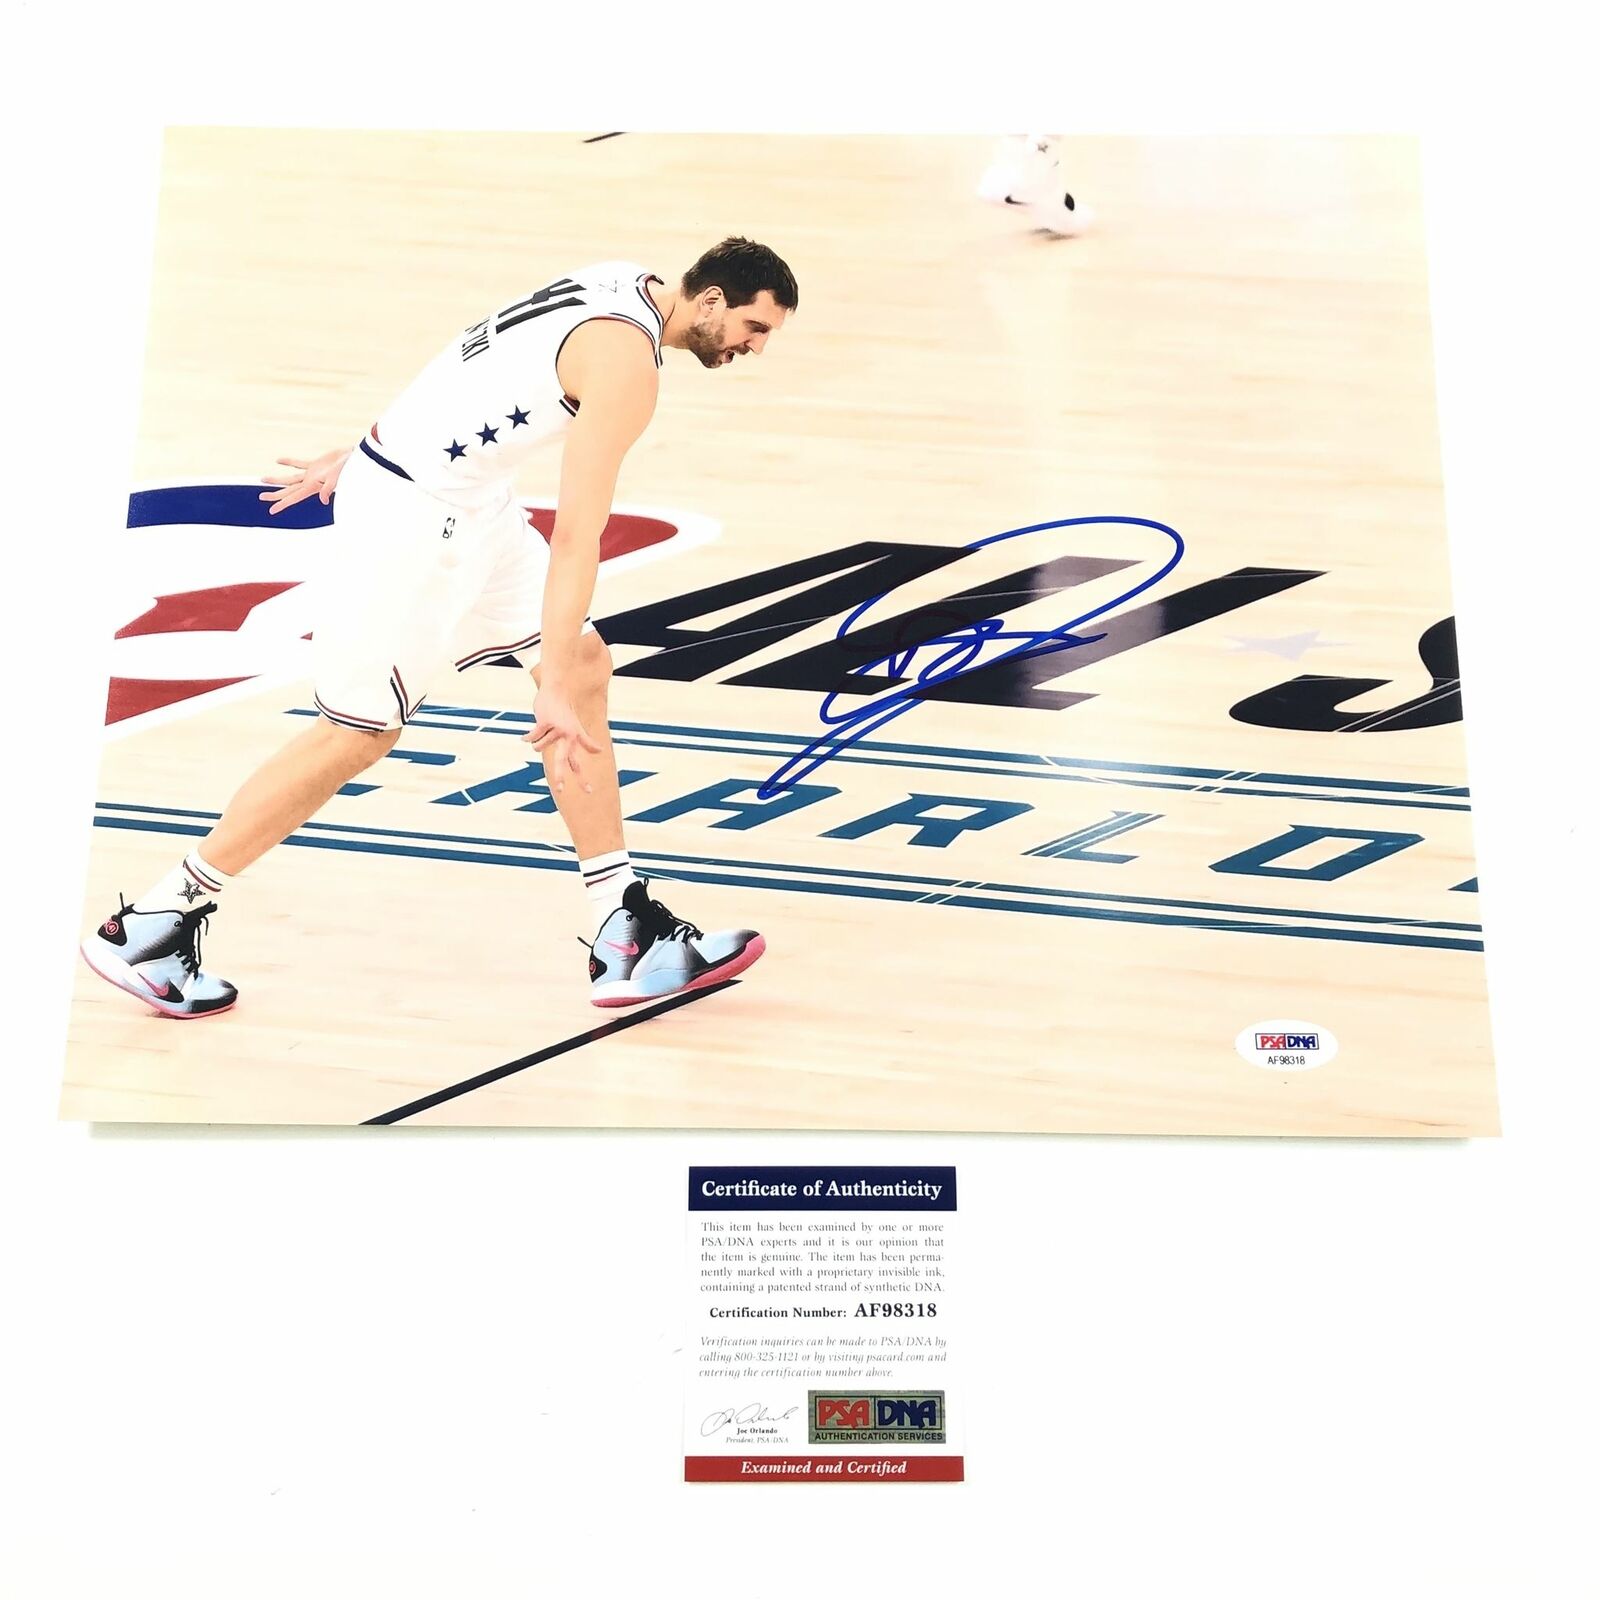 Dirk Nowitzki Signed 11x14 Photo Poster painting PSA/DNA Dallas Mavericks Autographed